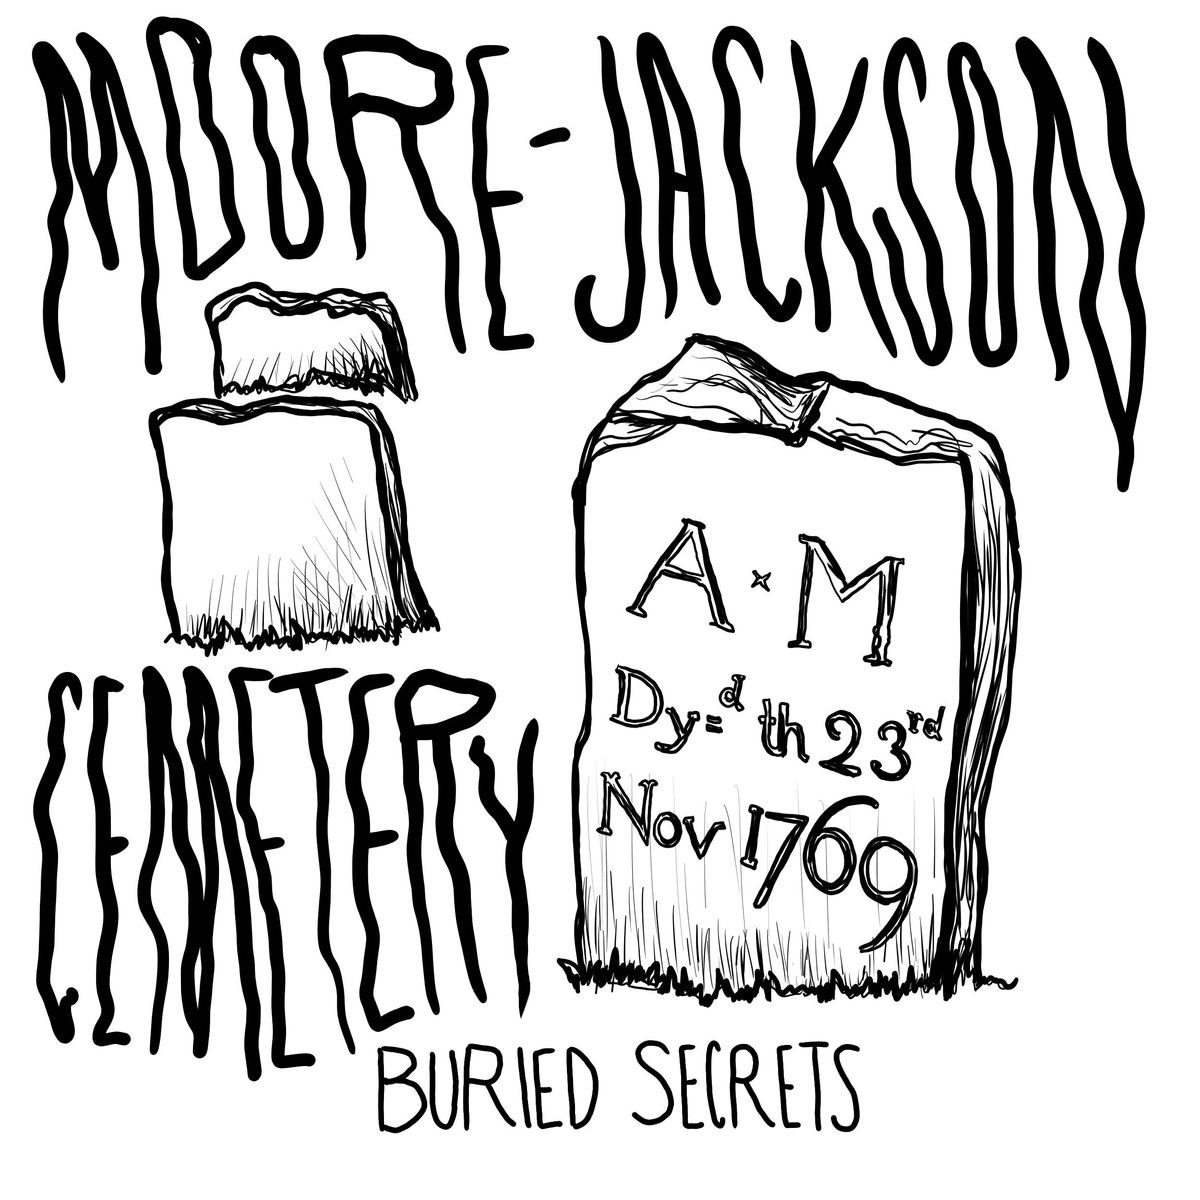 Moore-Jackson Cemetery (Hidden Cemeteries)